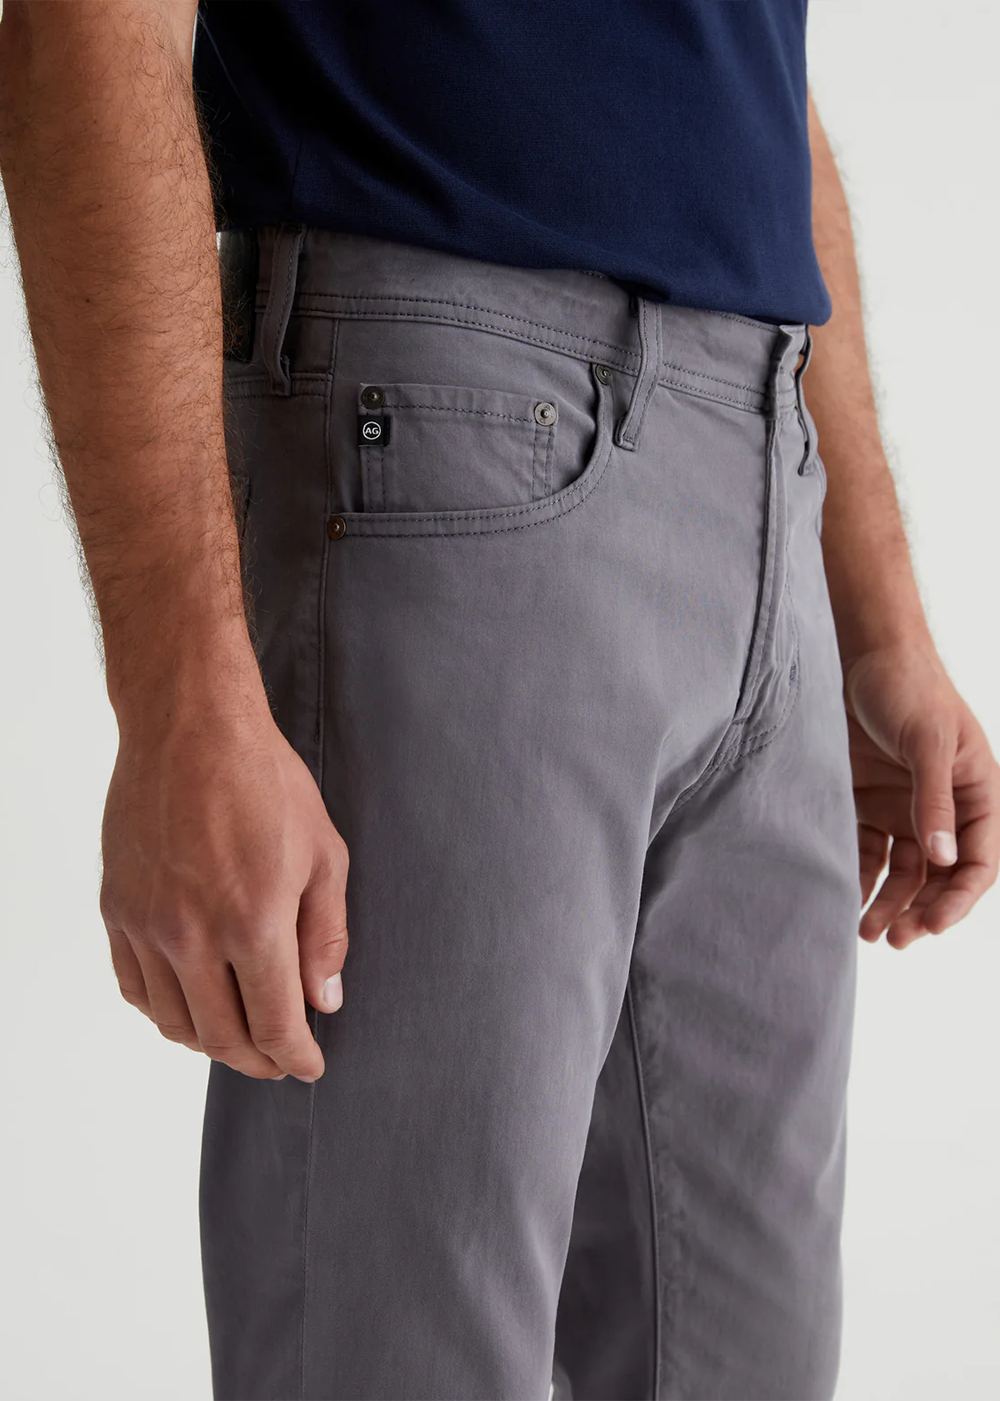 Tellis Modern Slim Sateen Pant - Folkestone Grey - AG Jeans Canada - Danali - 1783SUDFLKG